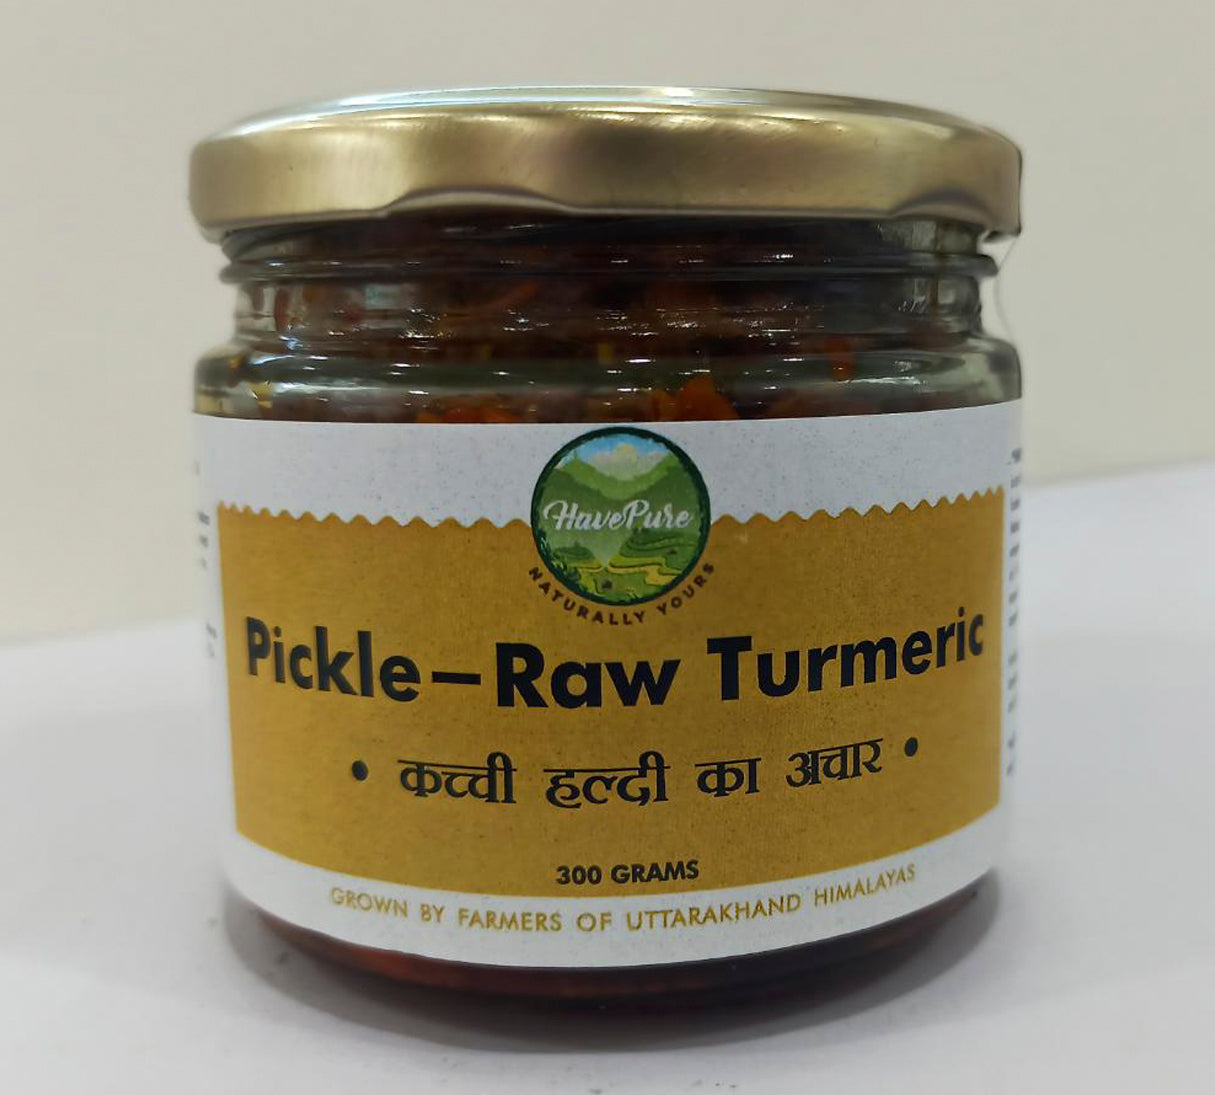 Raw Turmeric Pickle